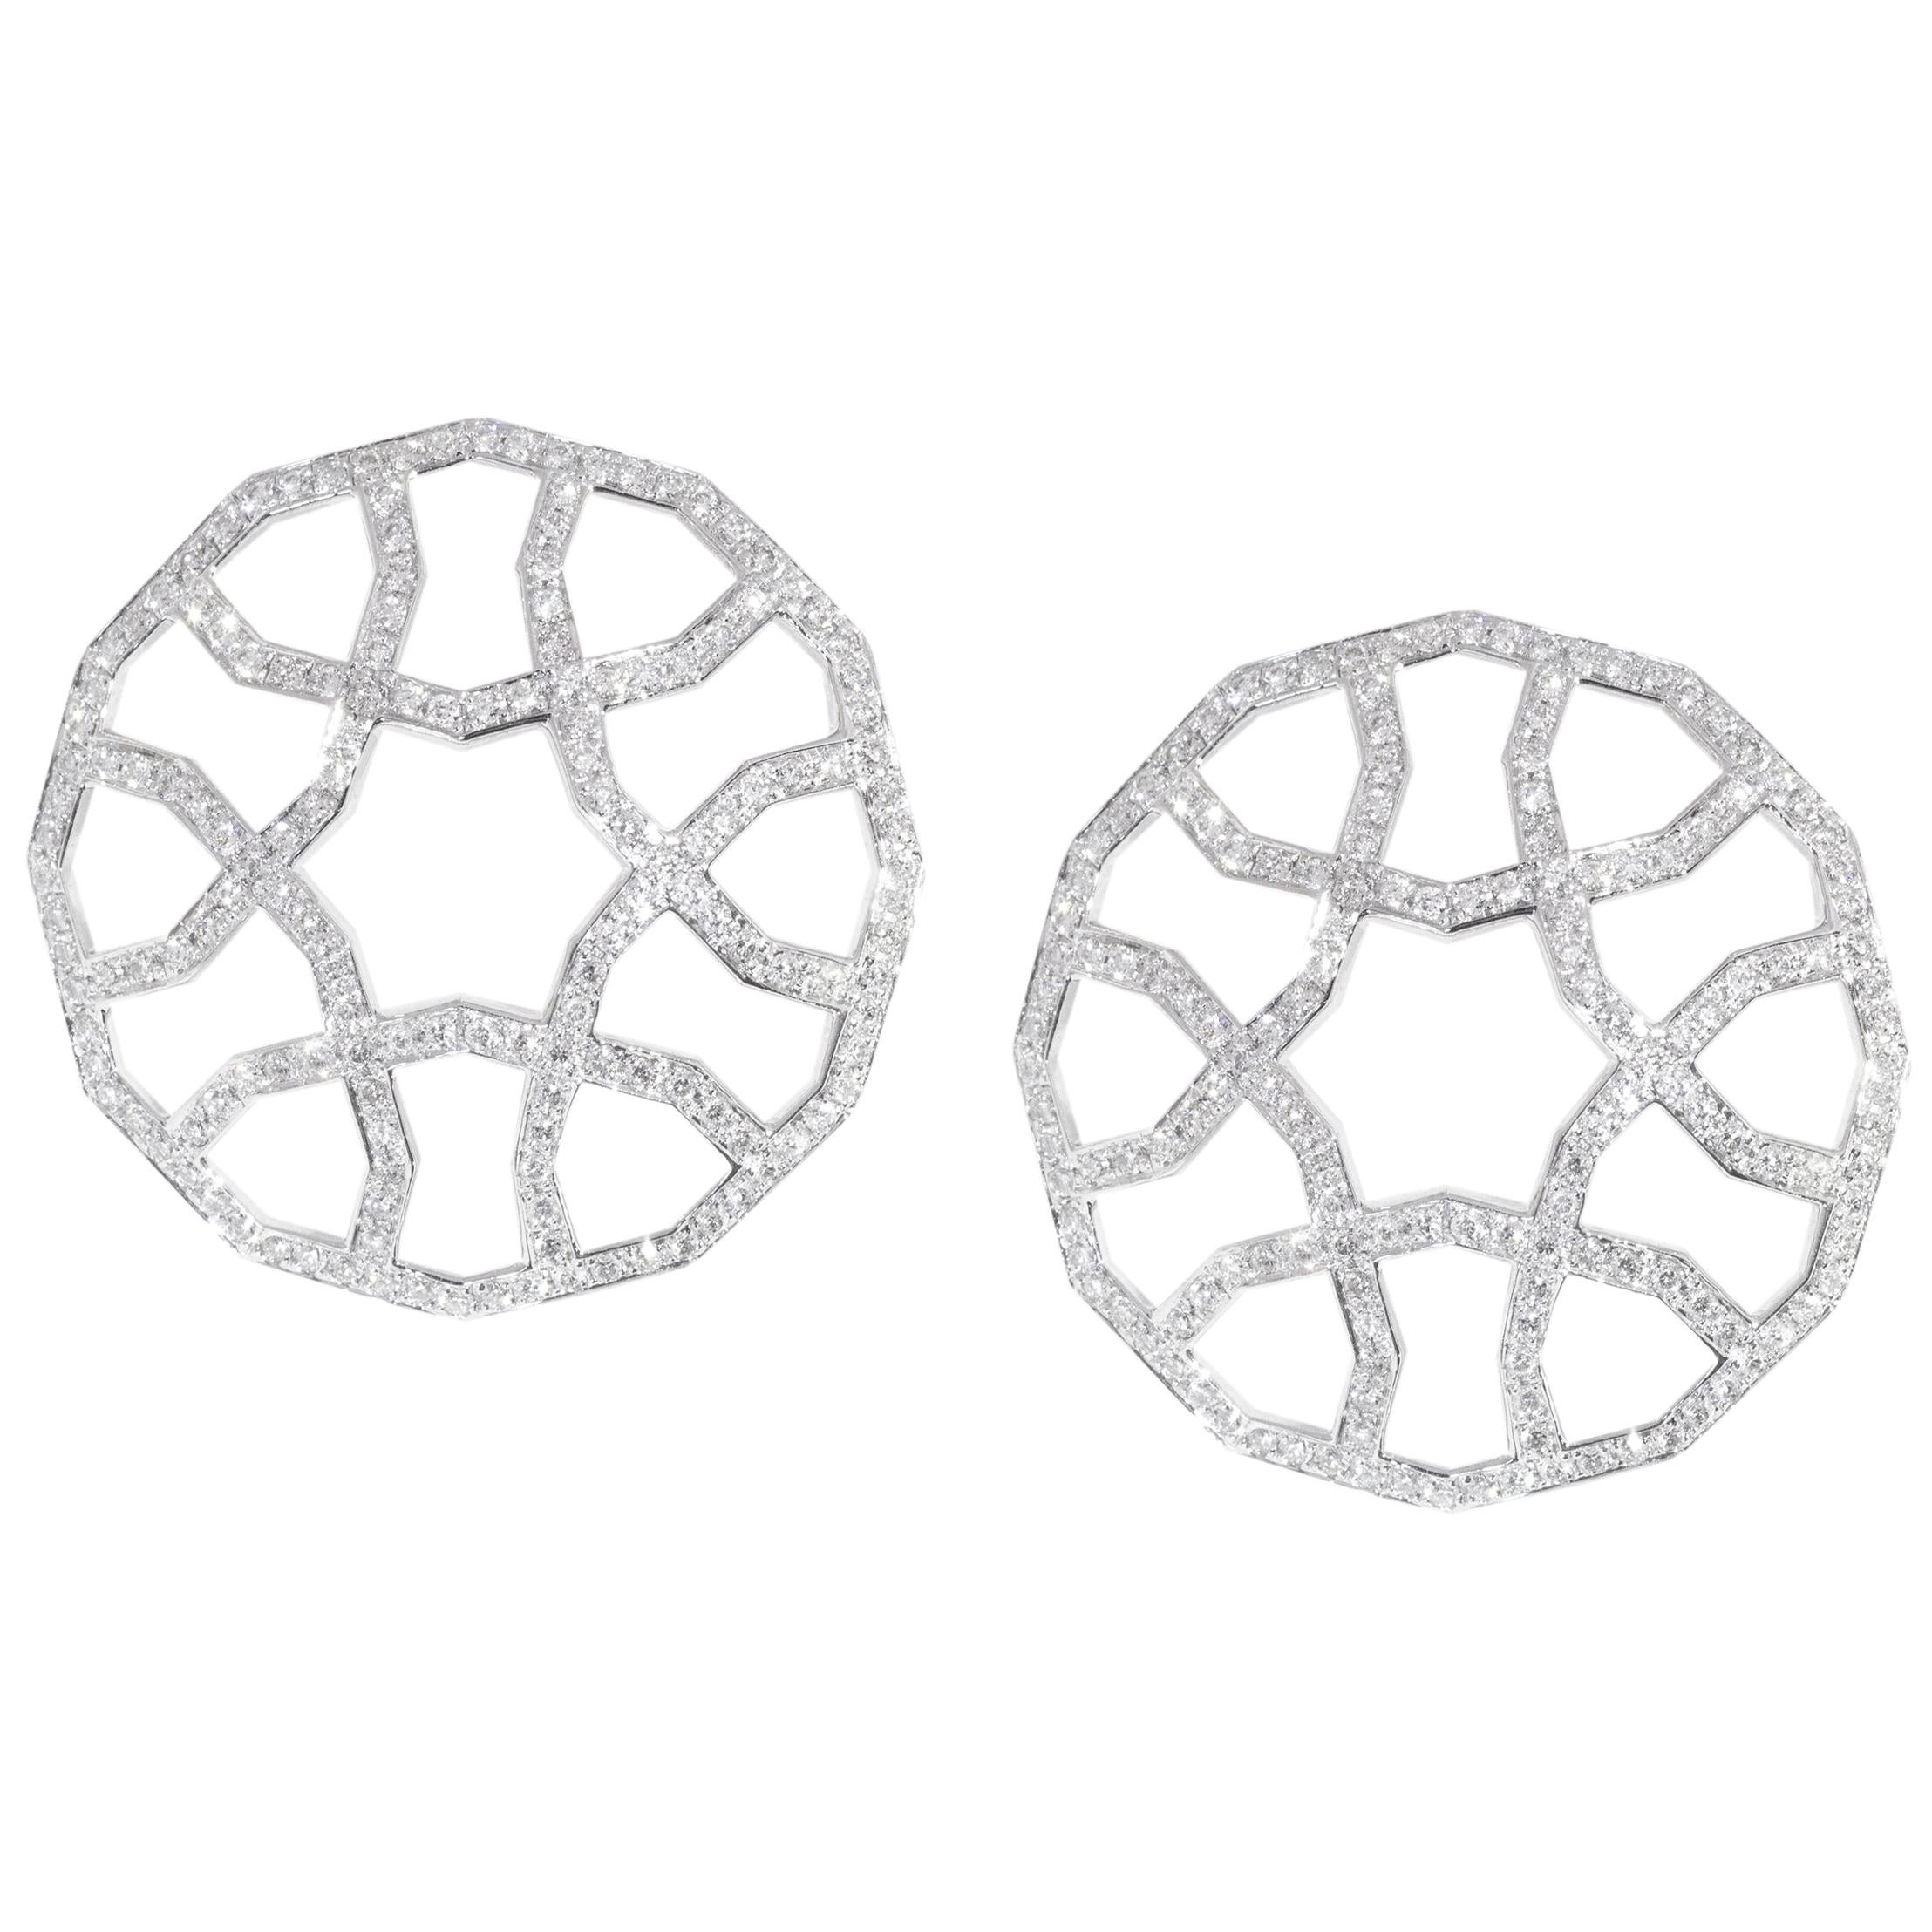 Ralph Masri Domed Arabesque Deco Diamond Earrings